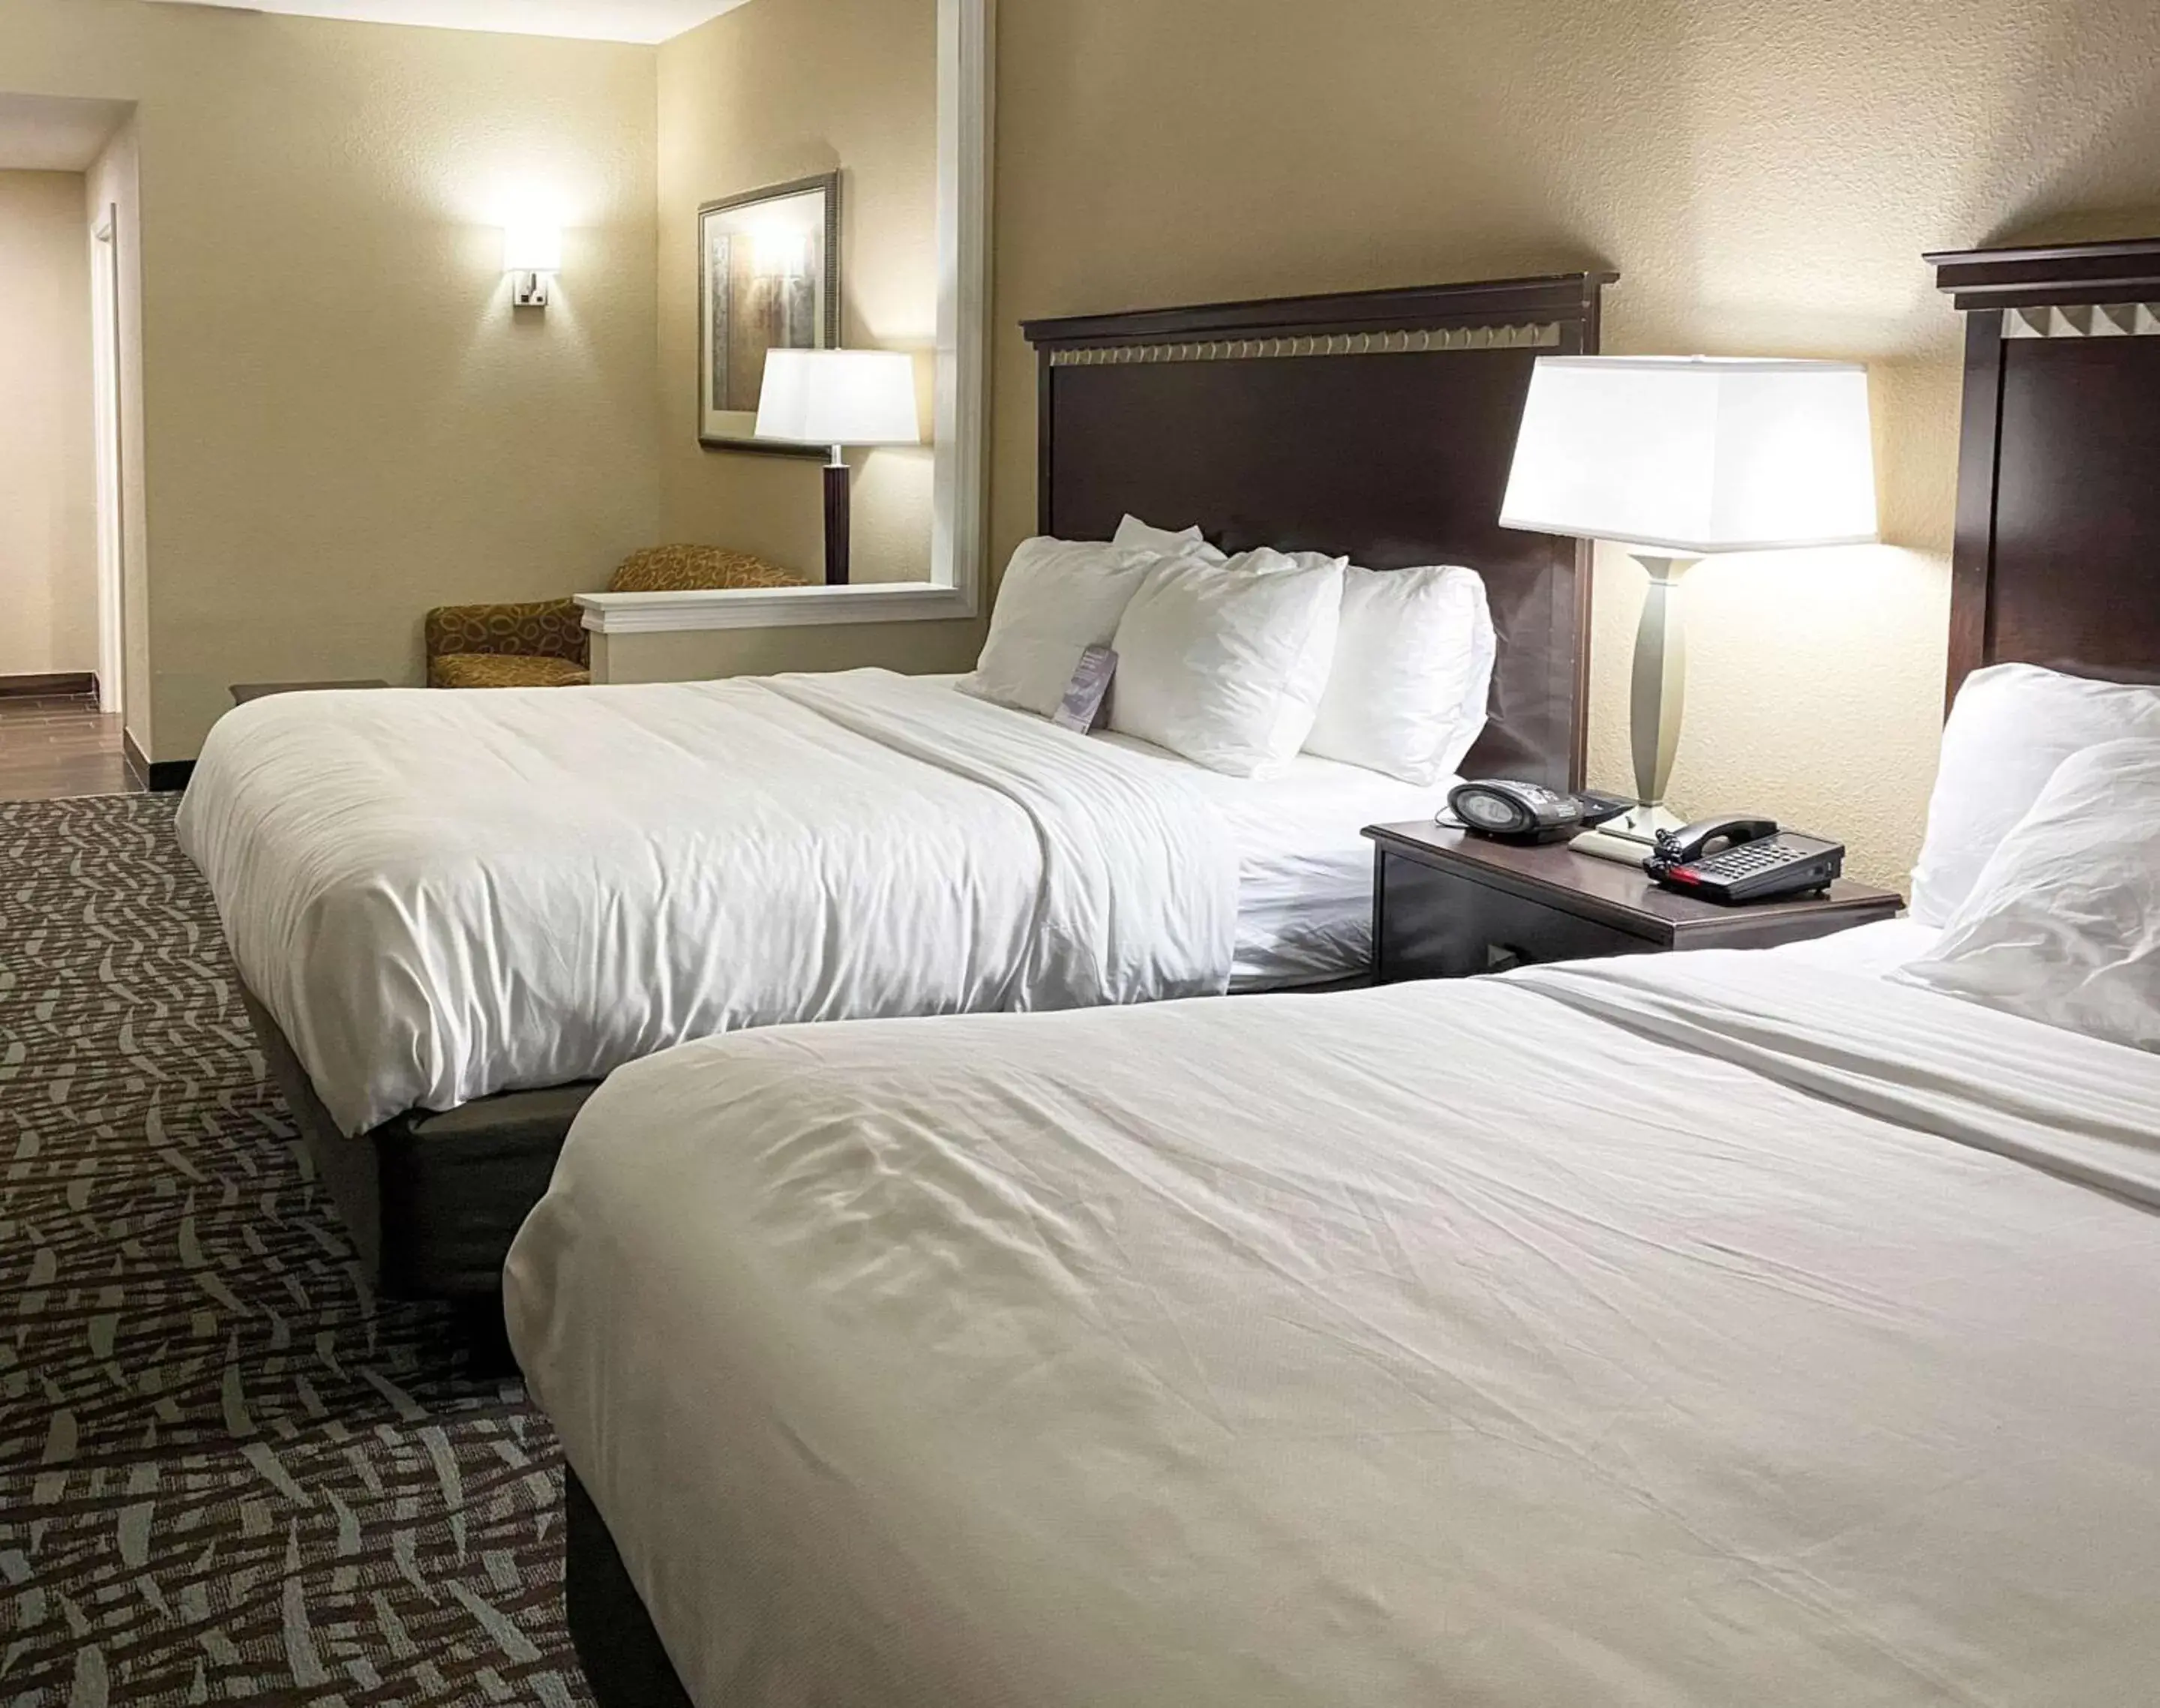 Bedroom, Bed in Comfort Suites by Choice Hotels, Kingsland, I-95, Kings Bay Naval Base